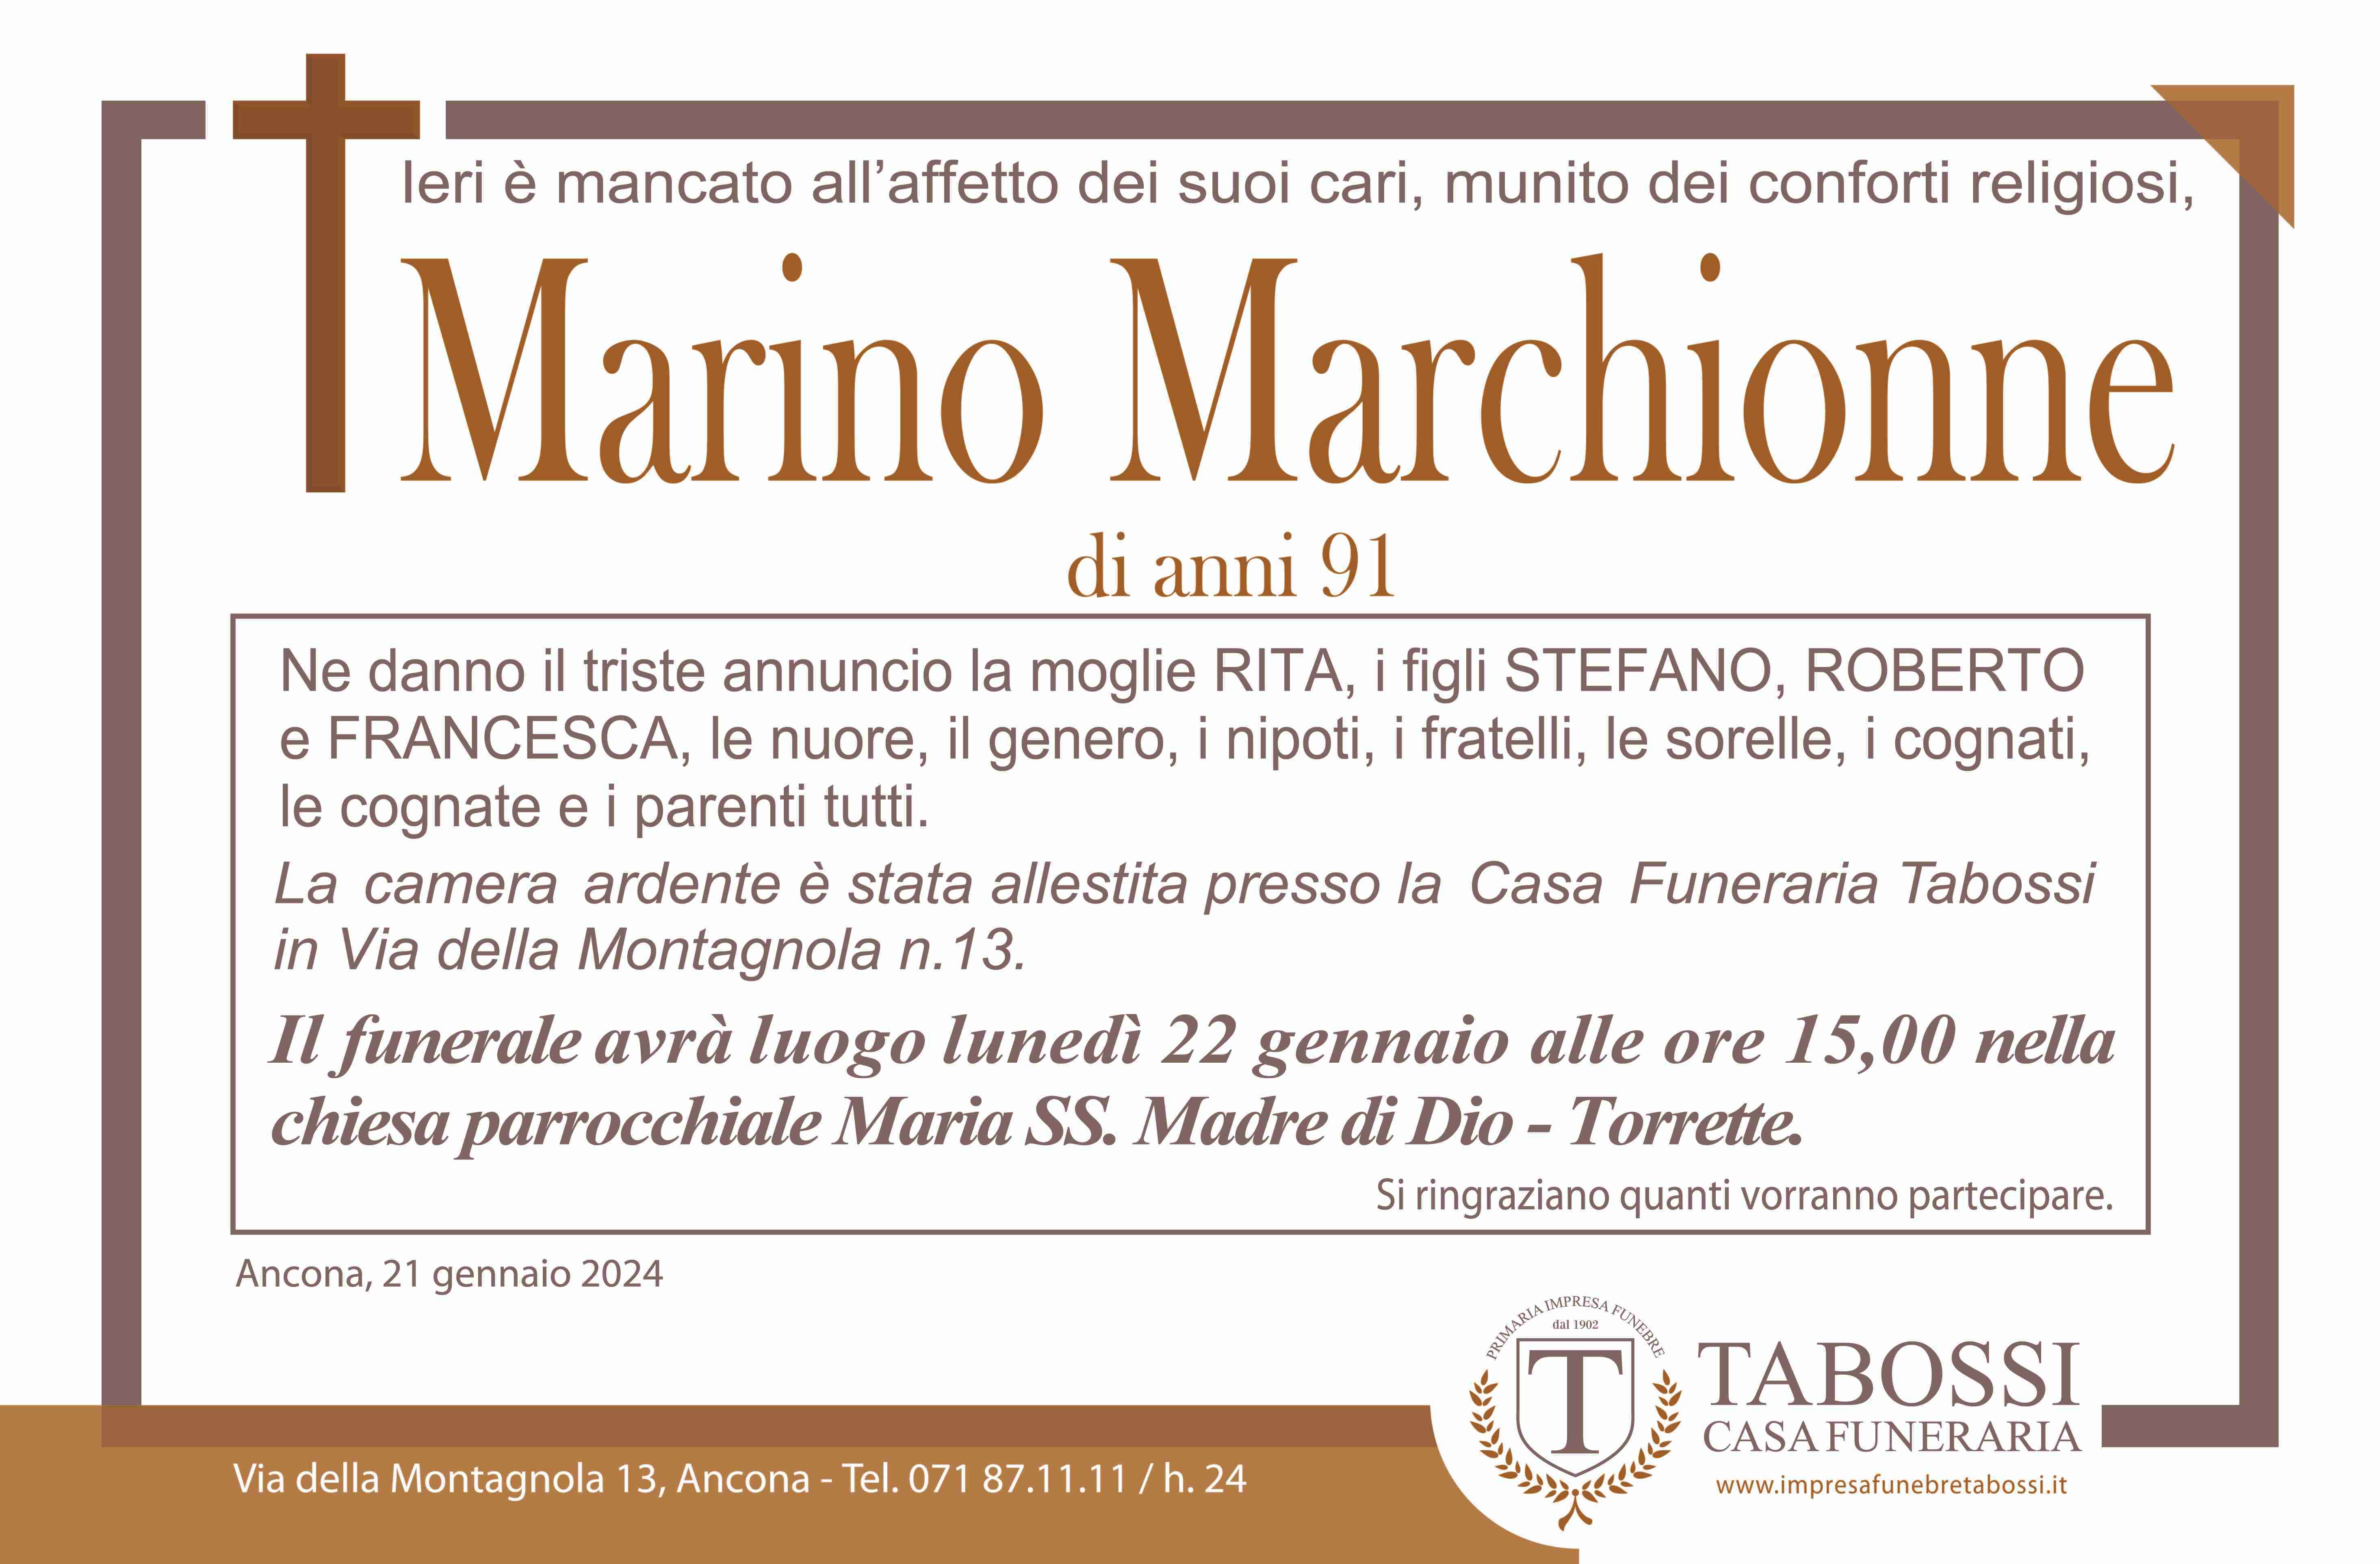 Marino Marchionne